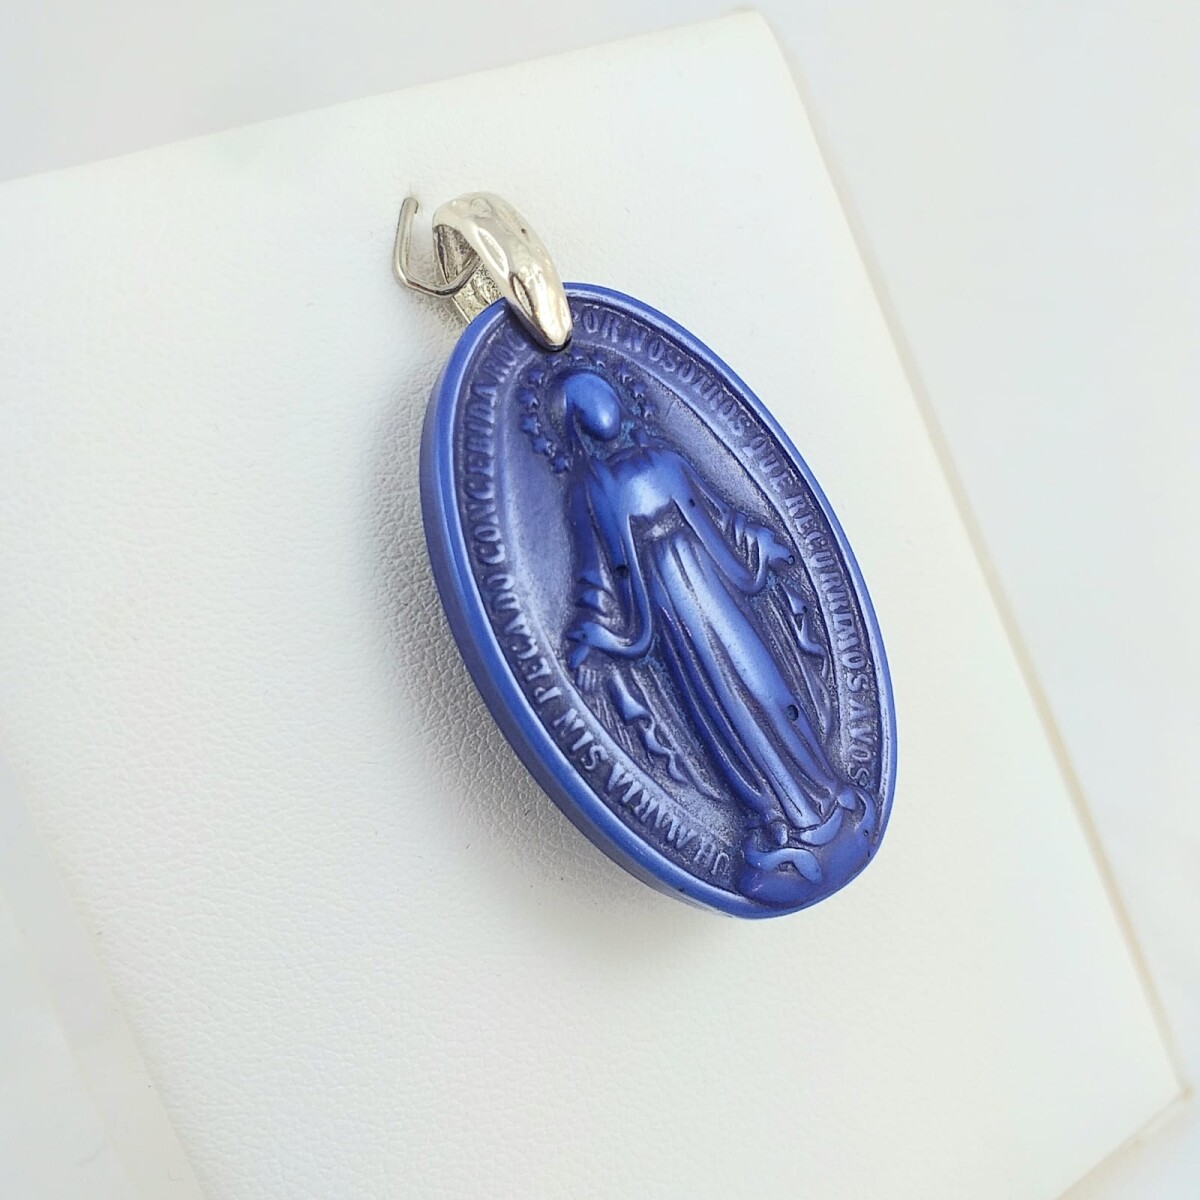 Medalla religiosa resina color azul Virgen Milagrosa, medidas 4cm*2.5cm, argolla de plata 925. 